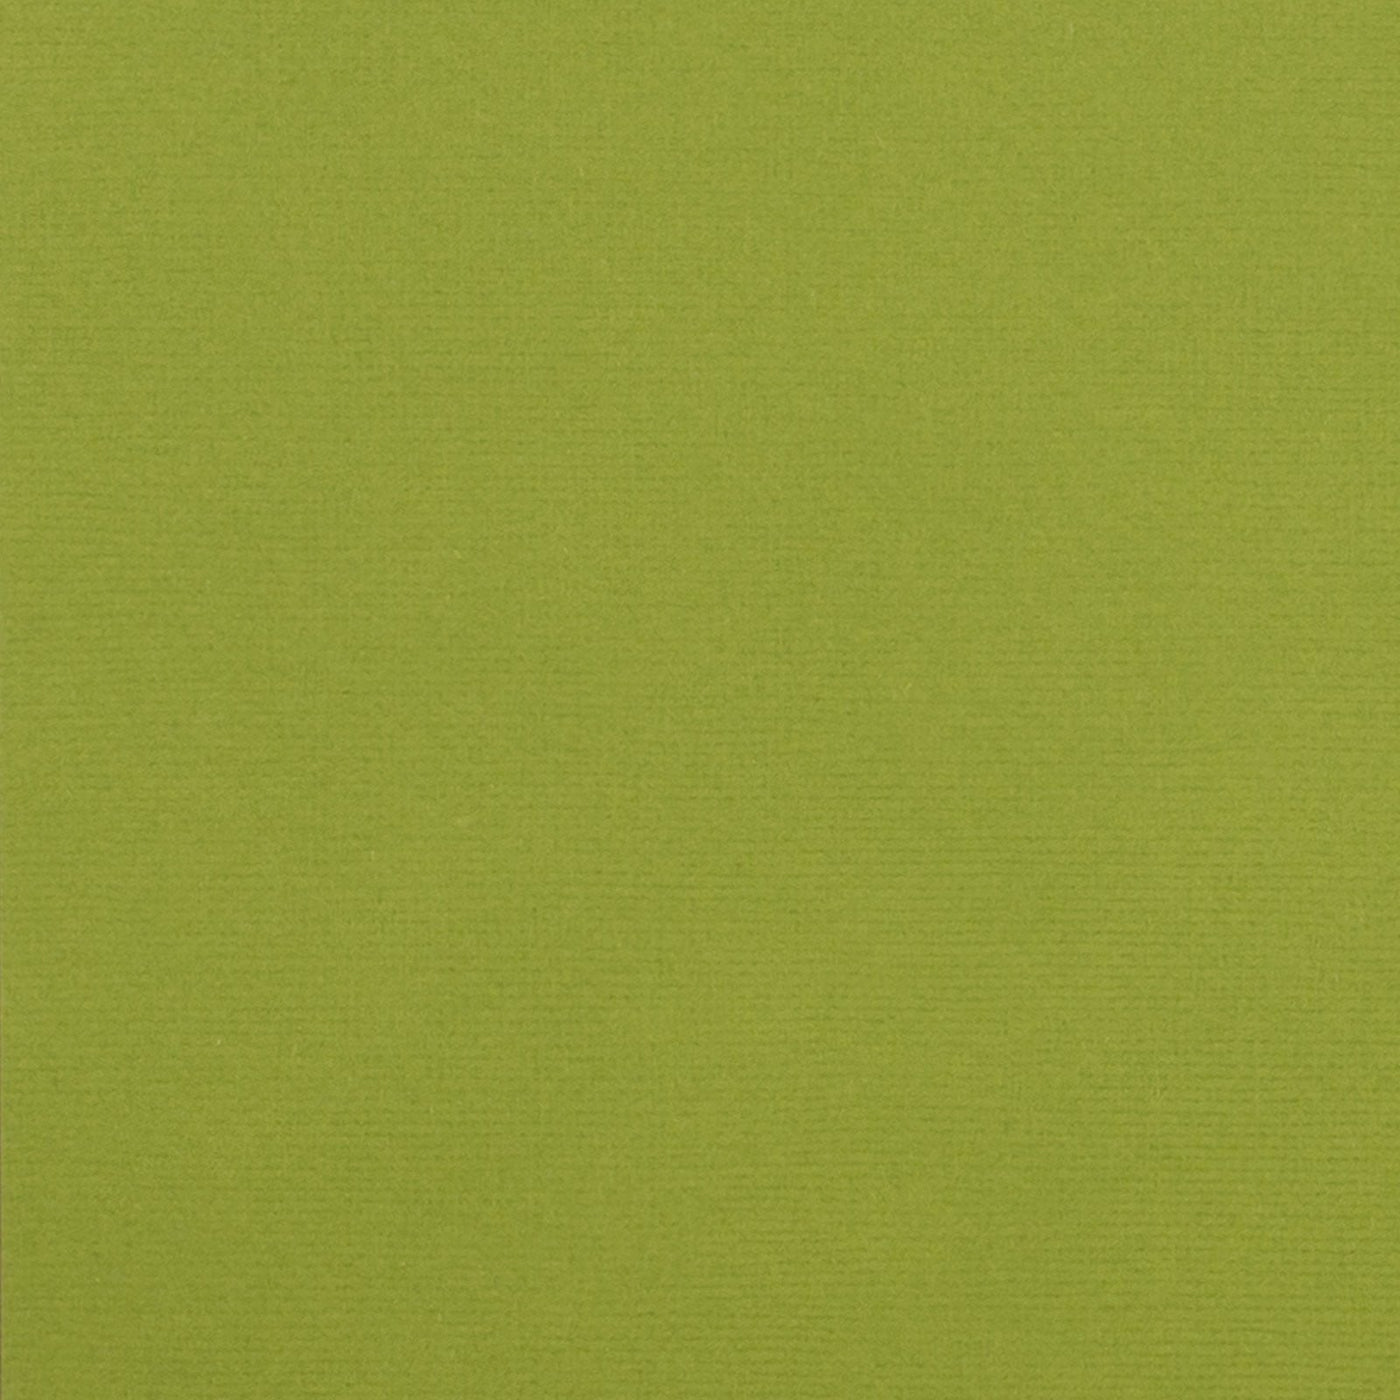 Leaf green cardstock - 12x12 inch - 80 lb - textured scrapbook paper - American Crafts